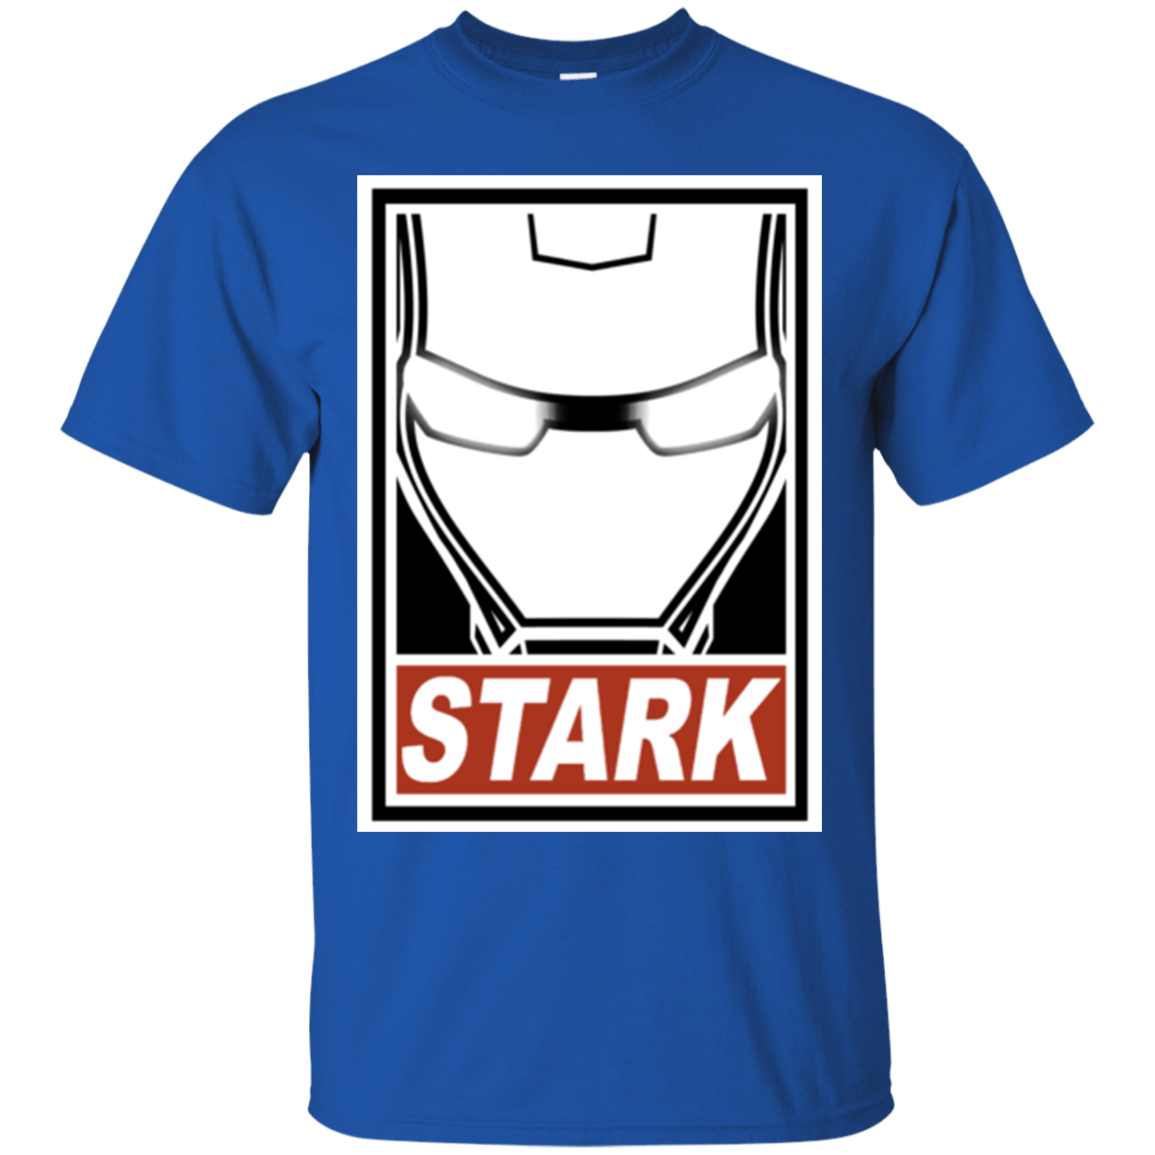 T-Shirts Royal / Small Obey Stark T-Shirt